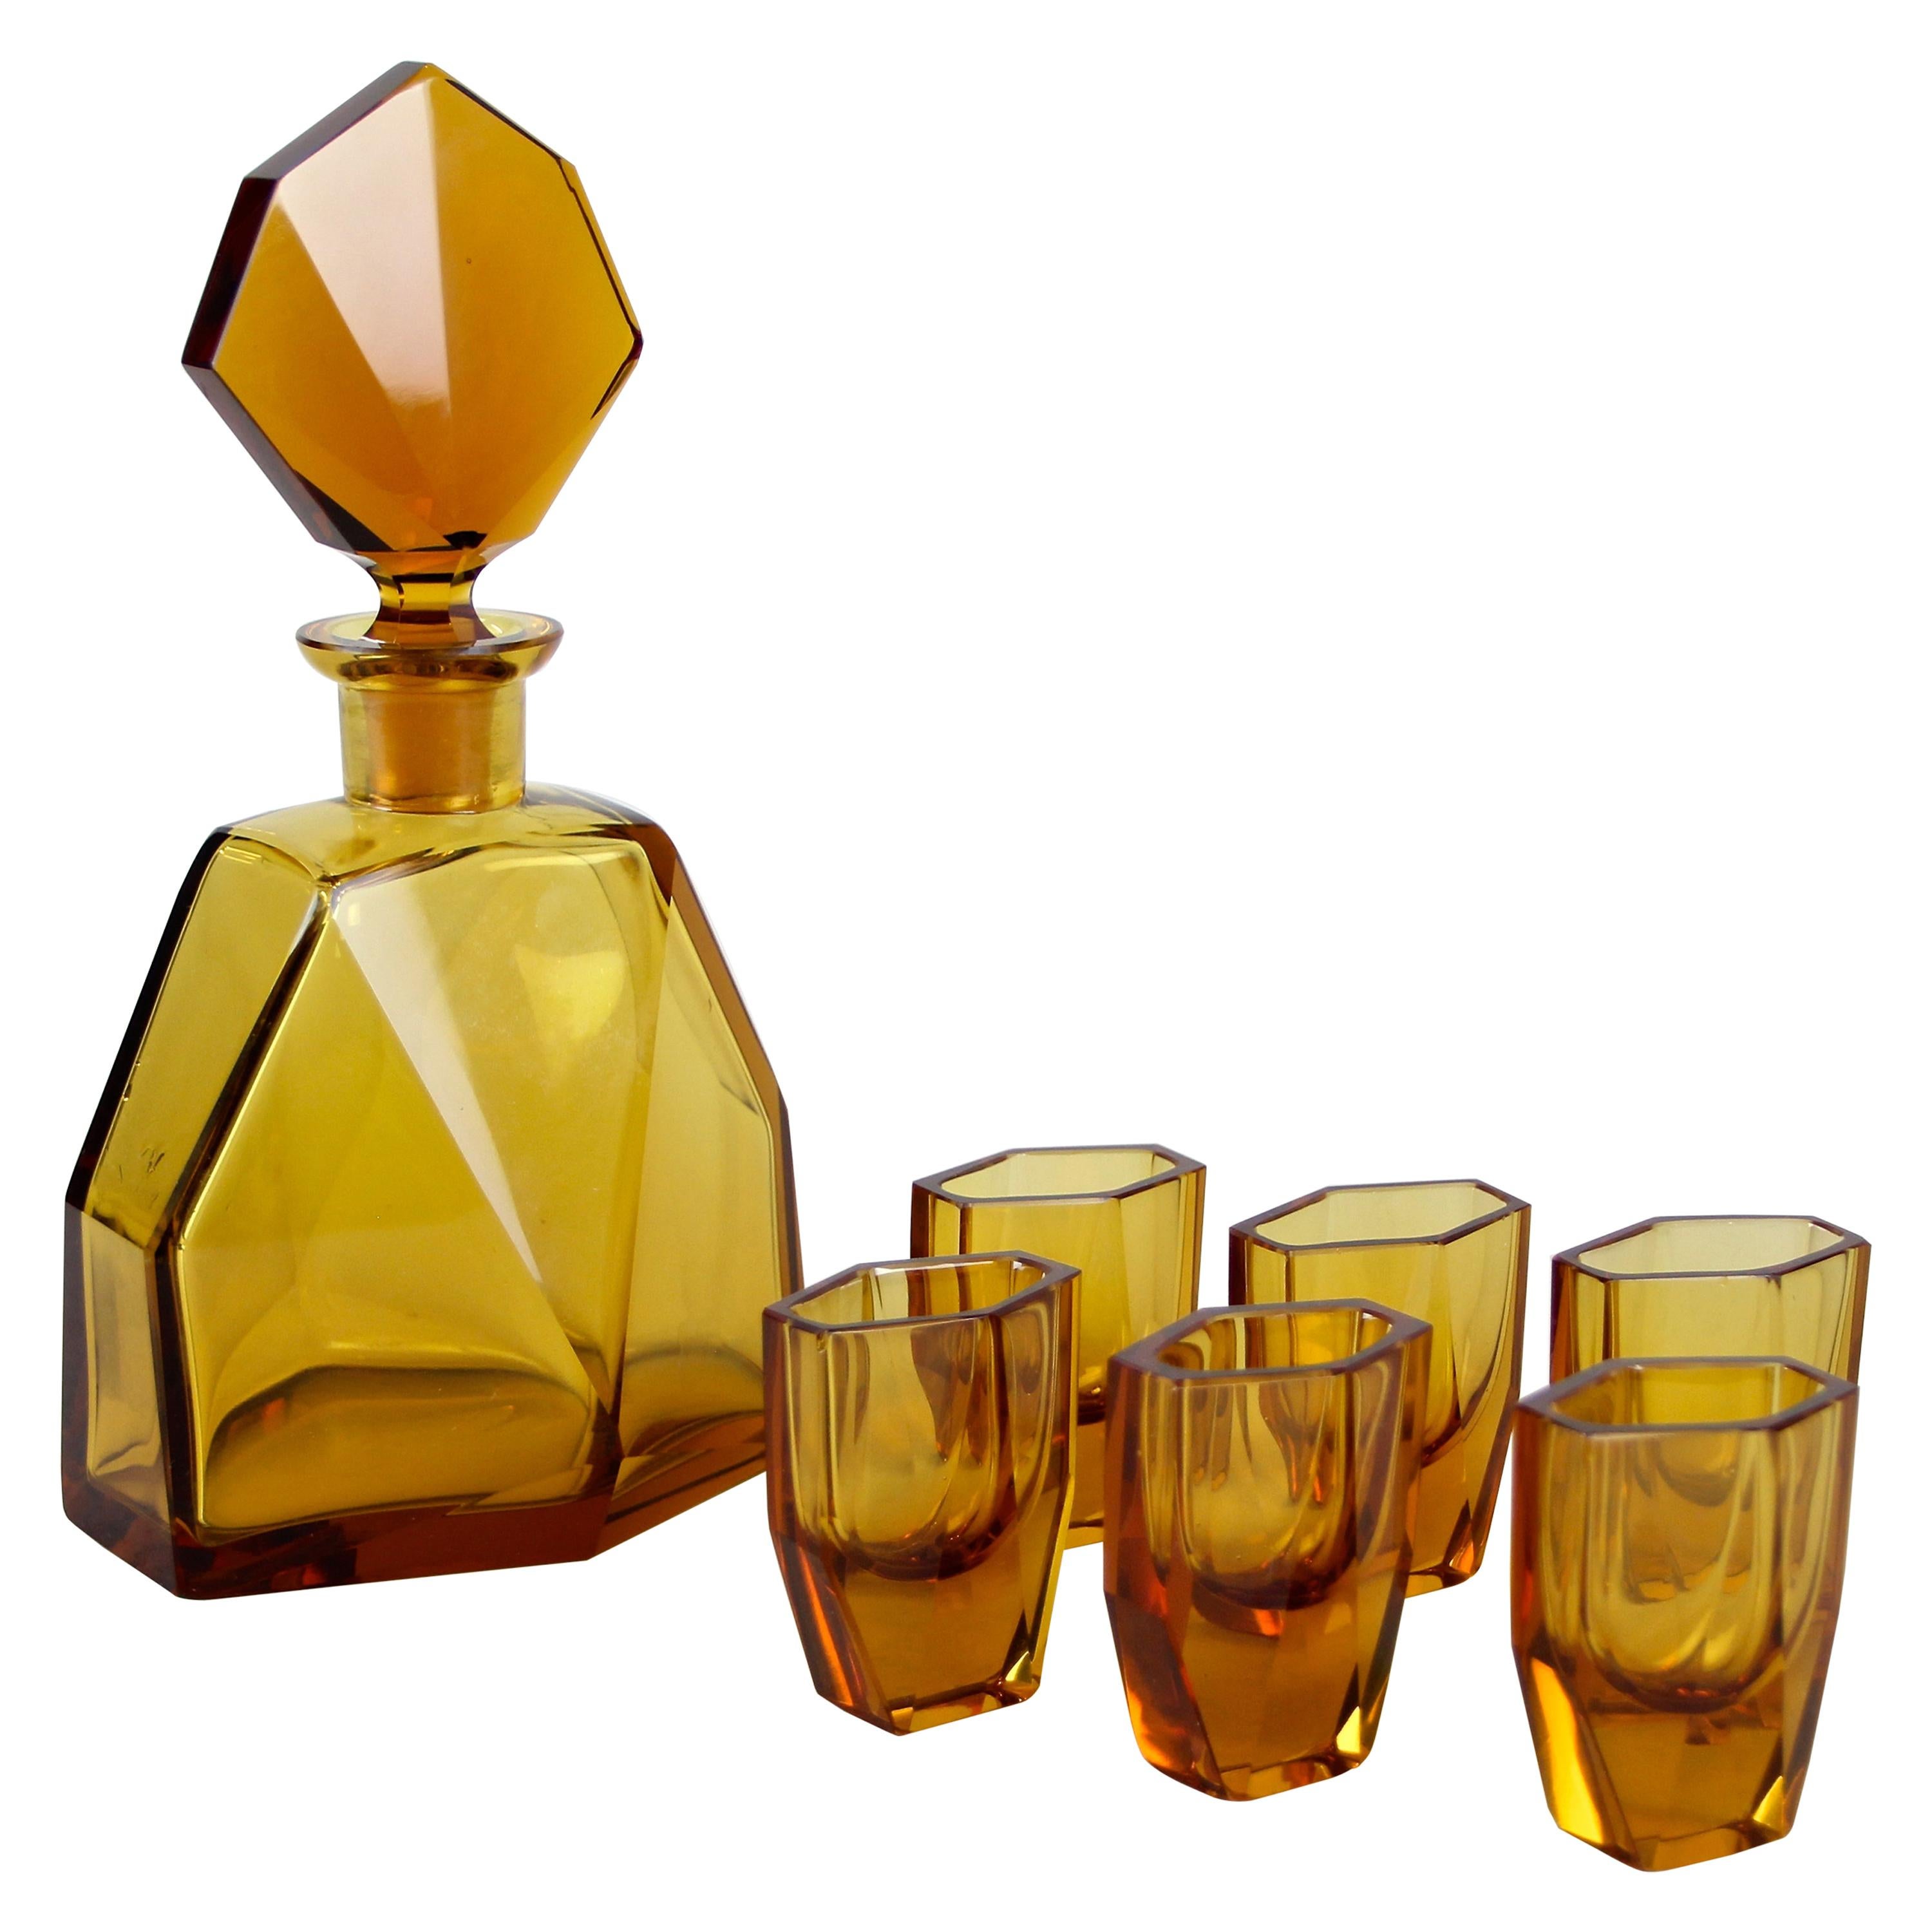 https://a.1stdibscdn.com/art-deco-design-glass-liquor-set-amber-colored-cz-circa-1925-for-sale/1121189/f_189363721588850210008/18936372_master.jpg